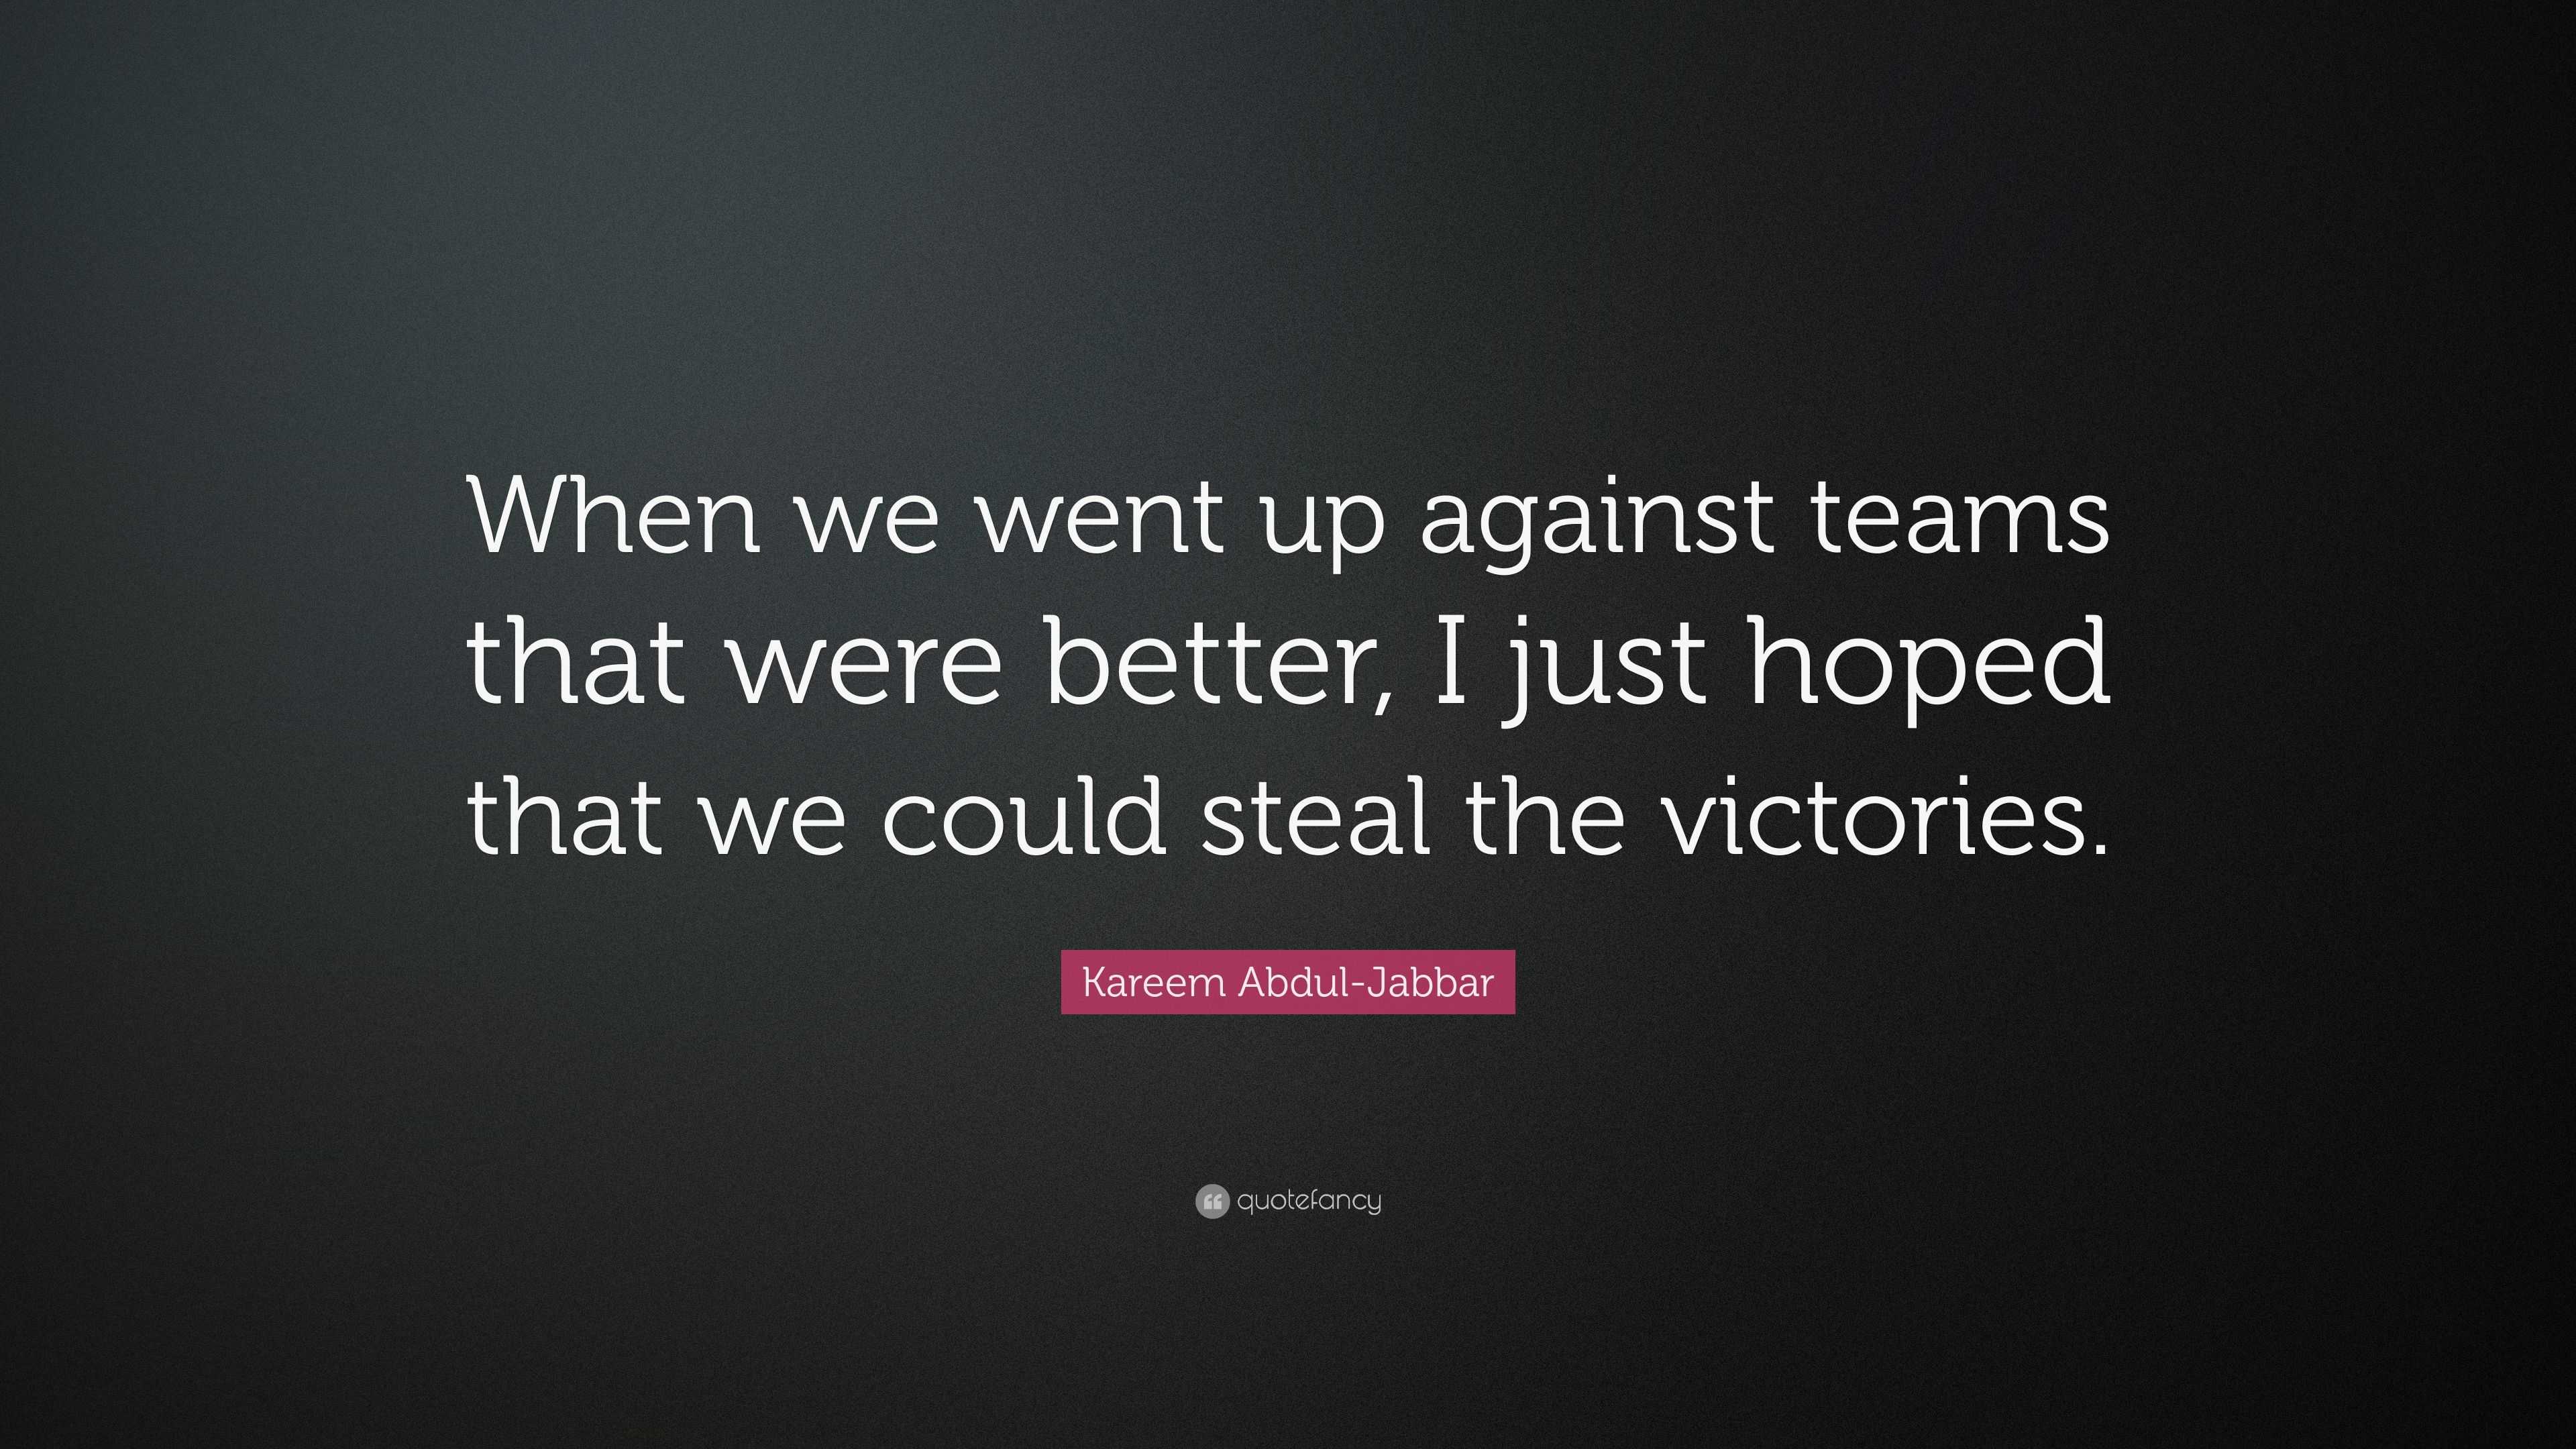 Kareem Abdul-Jabbar Quote: “When we went up against teams that were ...